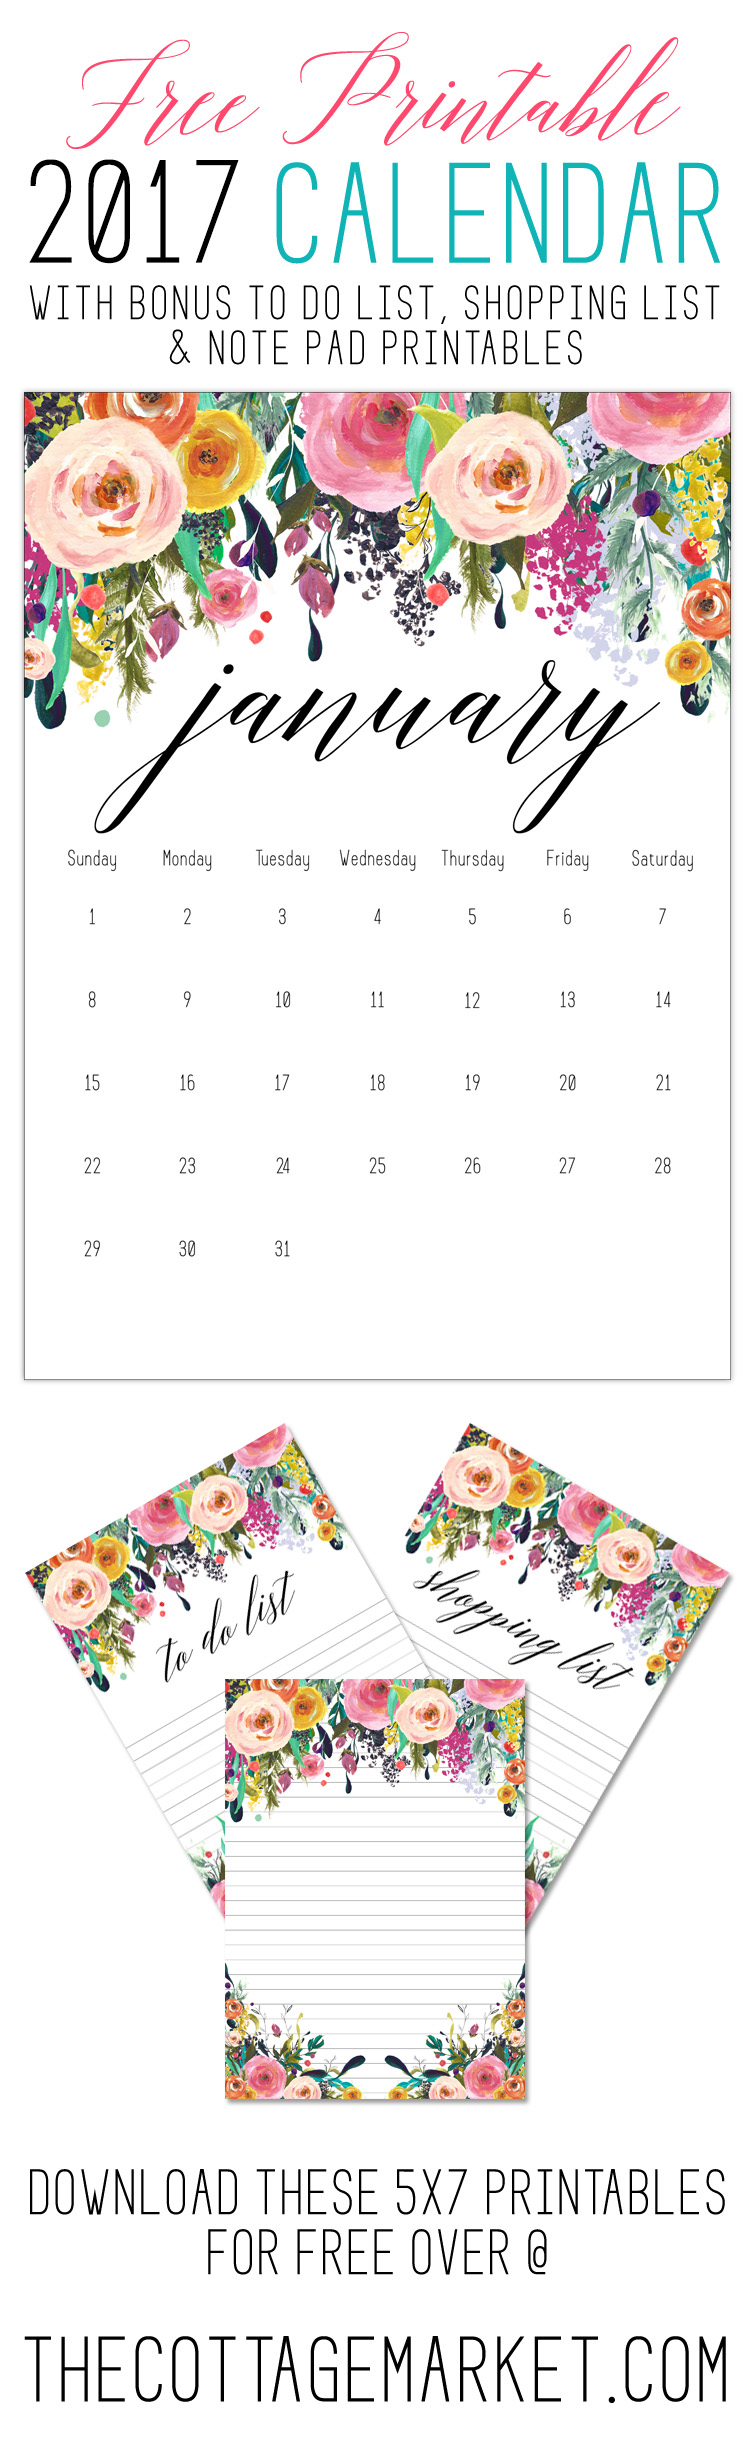 Free Printable 2017 Floral 5x7 Calendar The Cottage Market